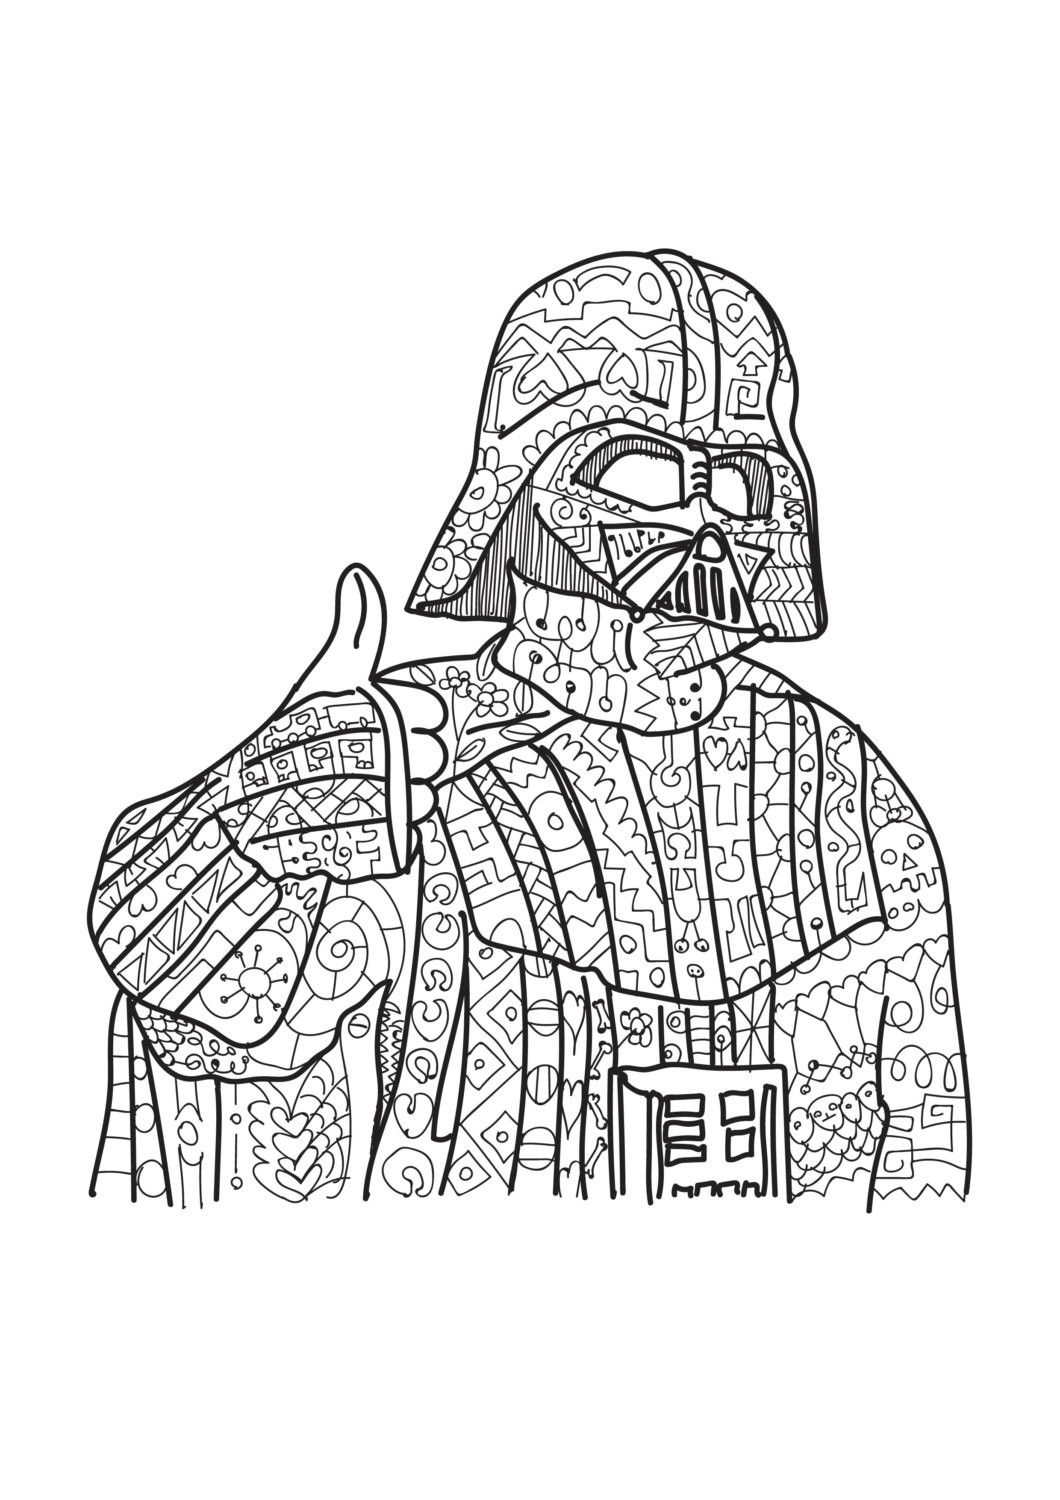 Adult Star Wars Coloring Book
 Darth Vader Star Wars coloring page Adult coloring